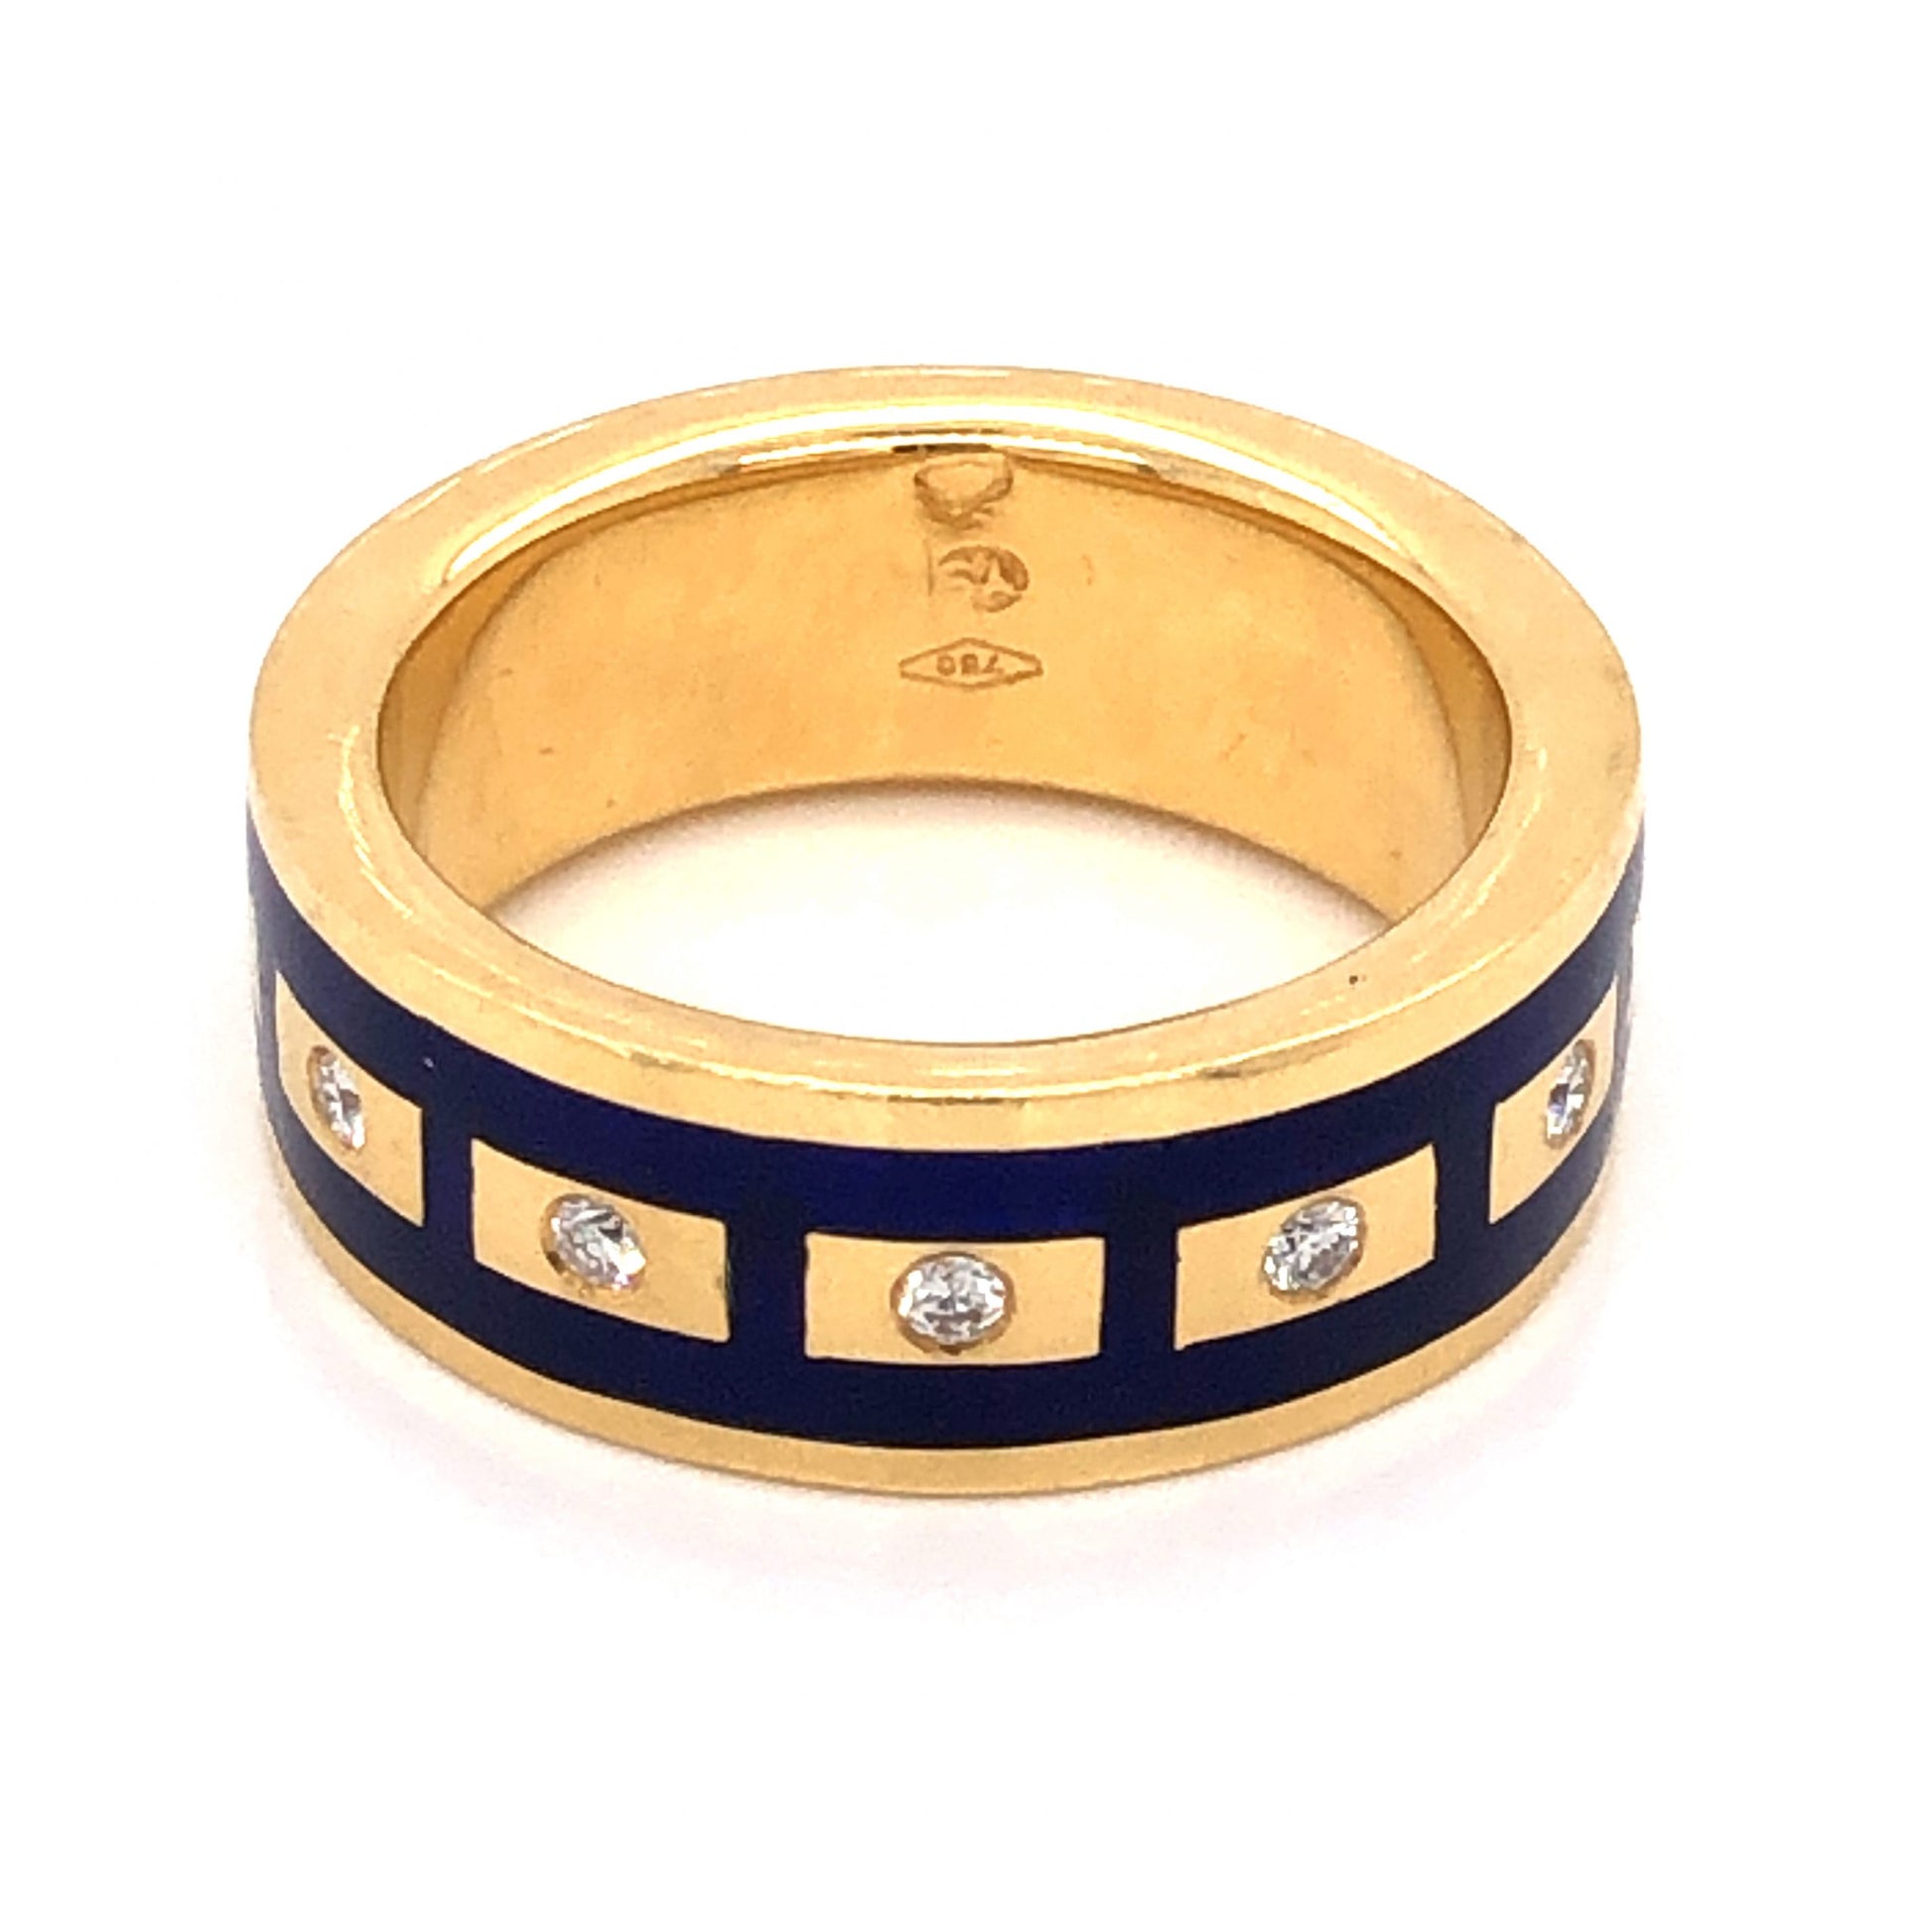 .10 Diamond Right Hand Ring in 18K Yellow Gold w/ Blue Enamel